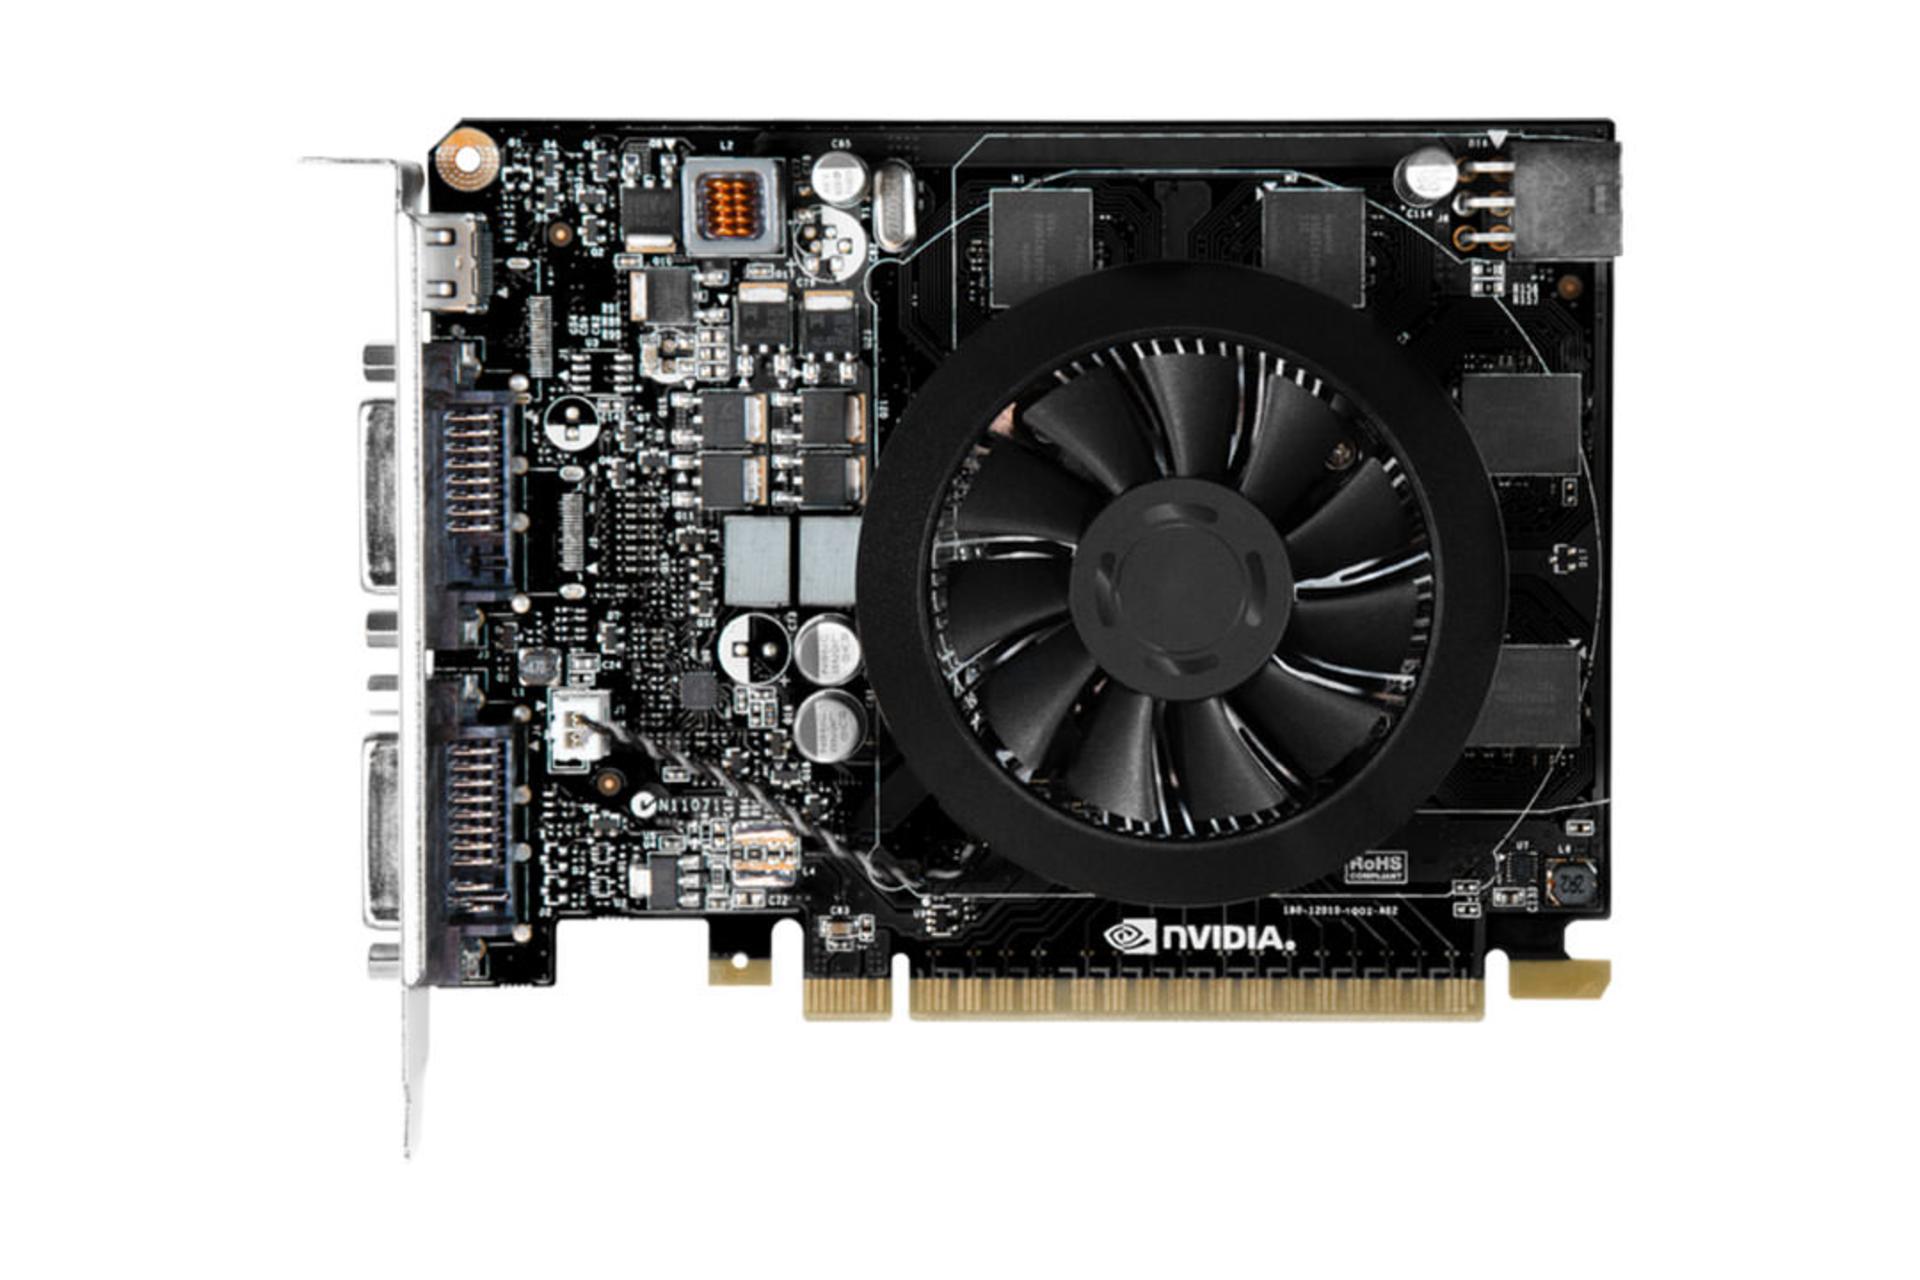 Nvidia GeForce GT 740